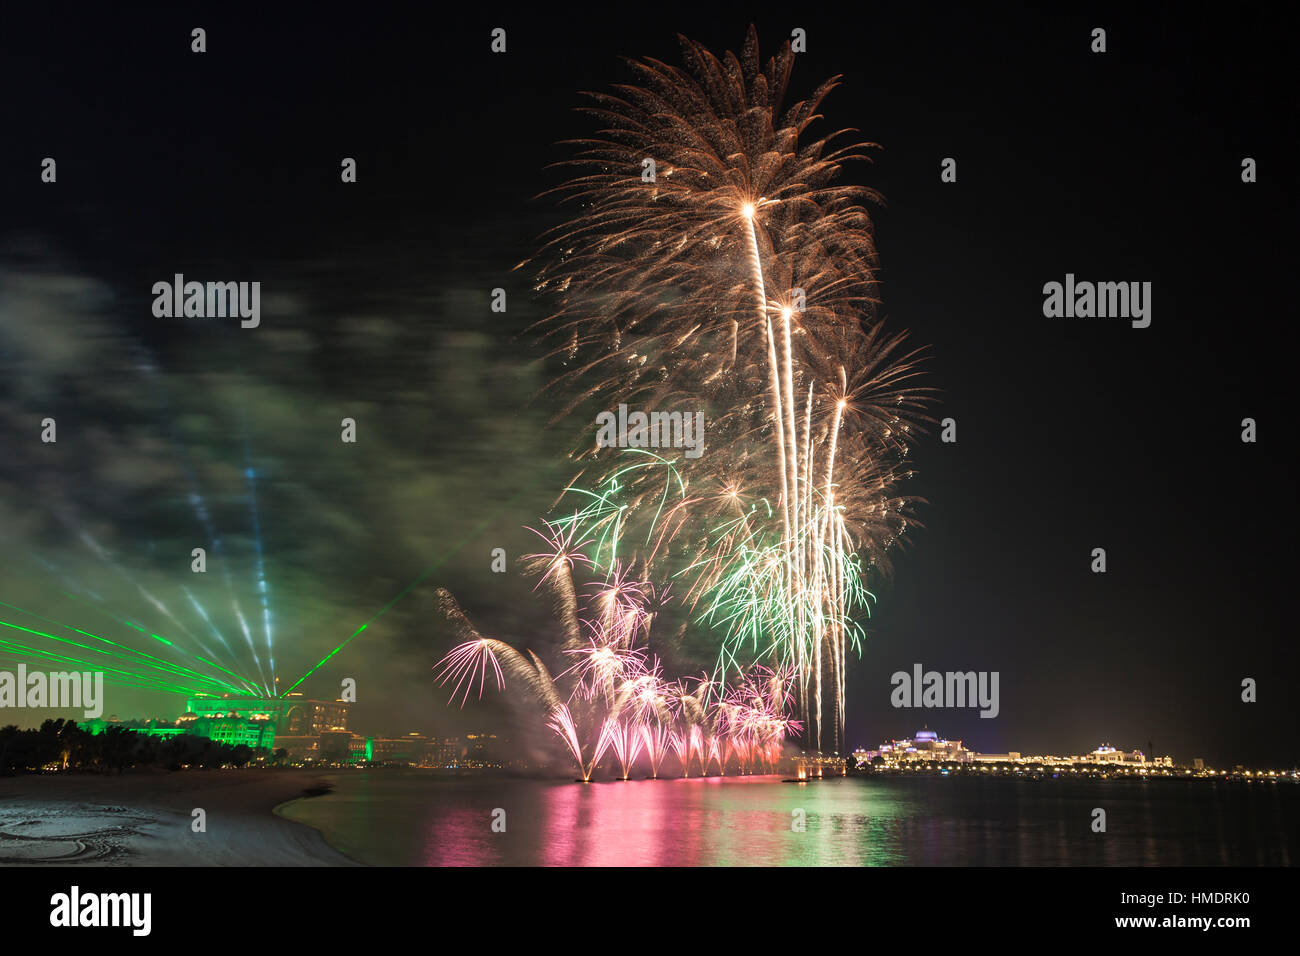 The 45th UAE National Day celebration fireworks in Abu Dhabi Stock Photo